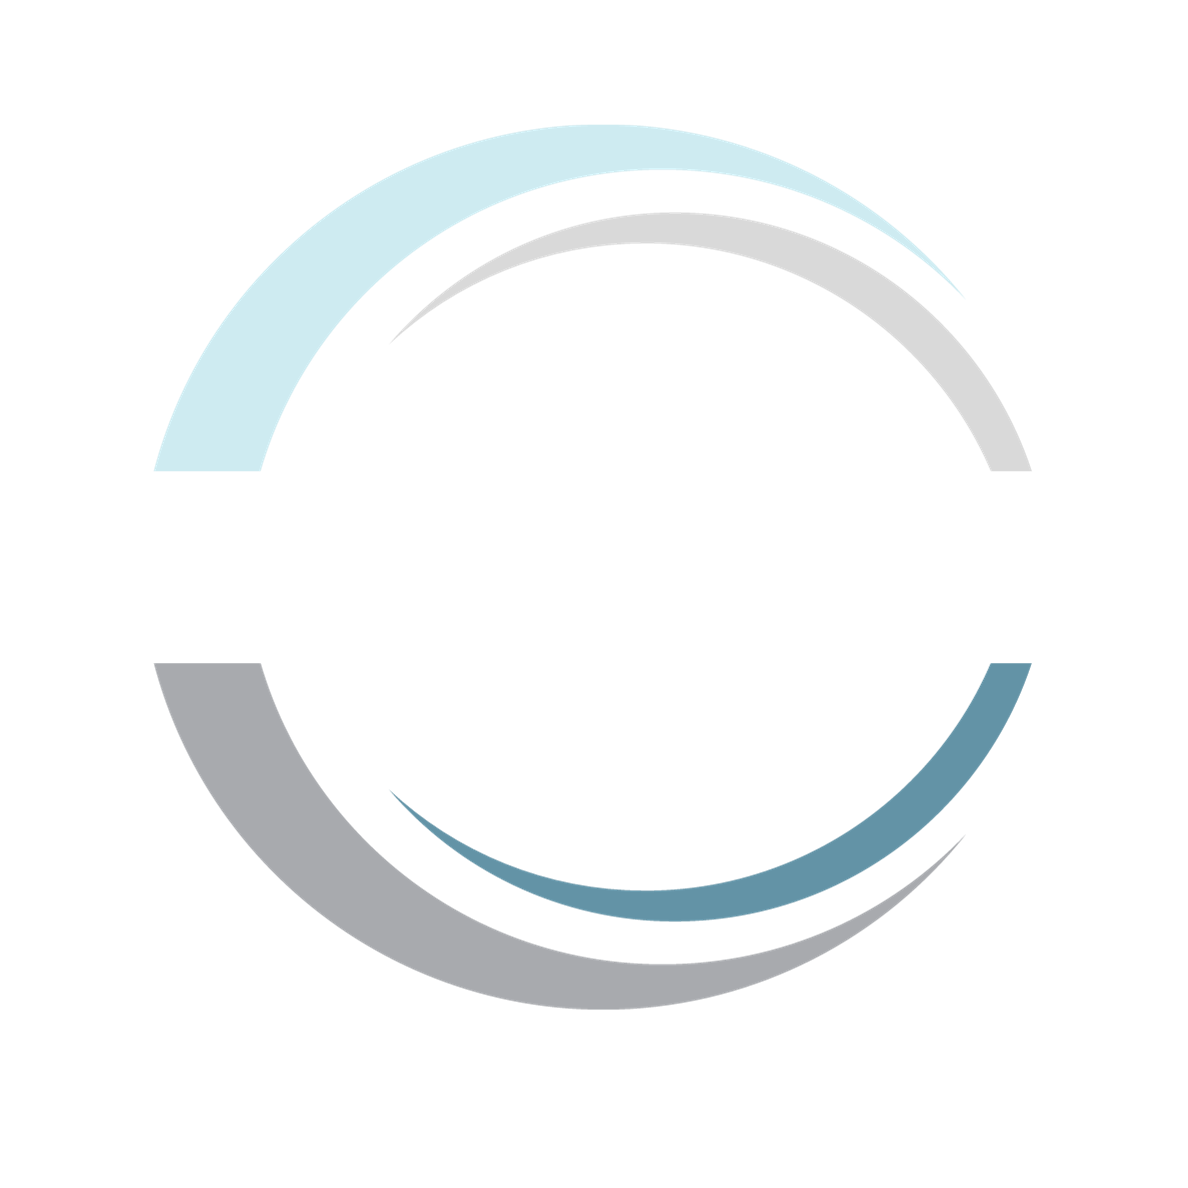 St. Joseph County ISD